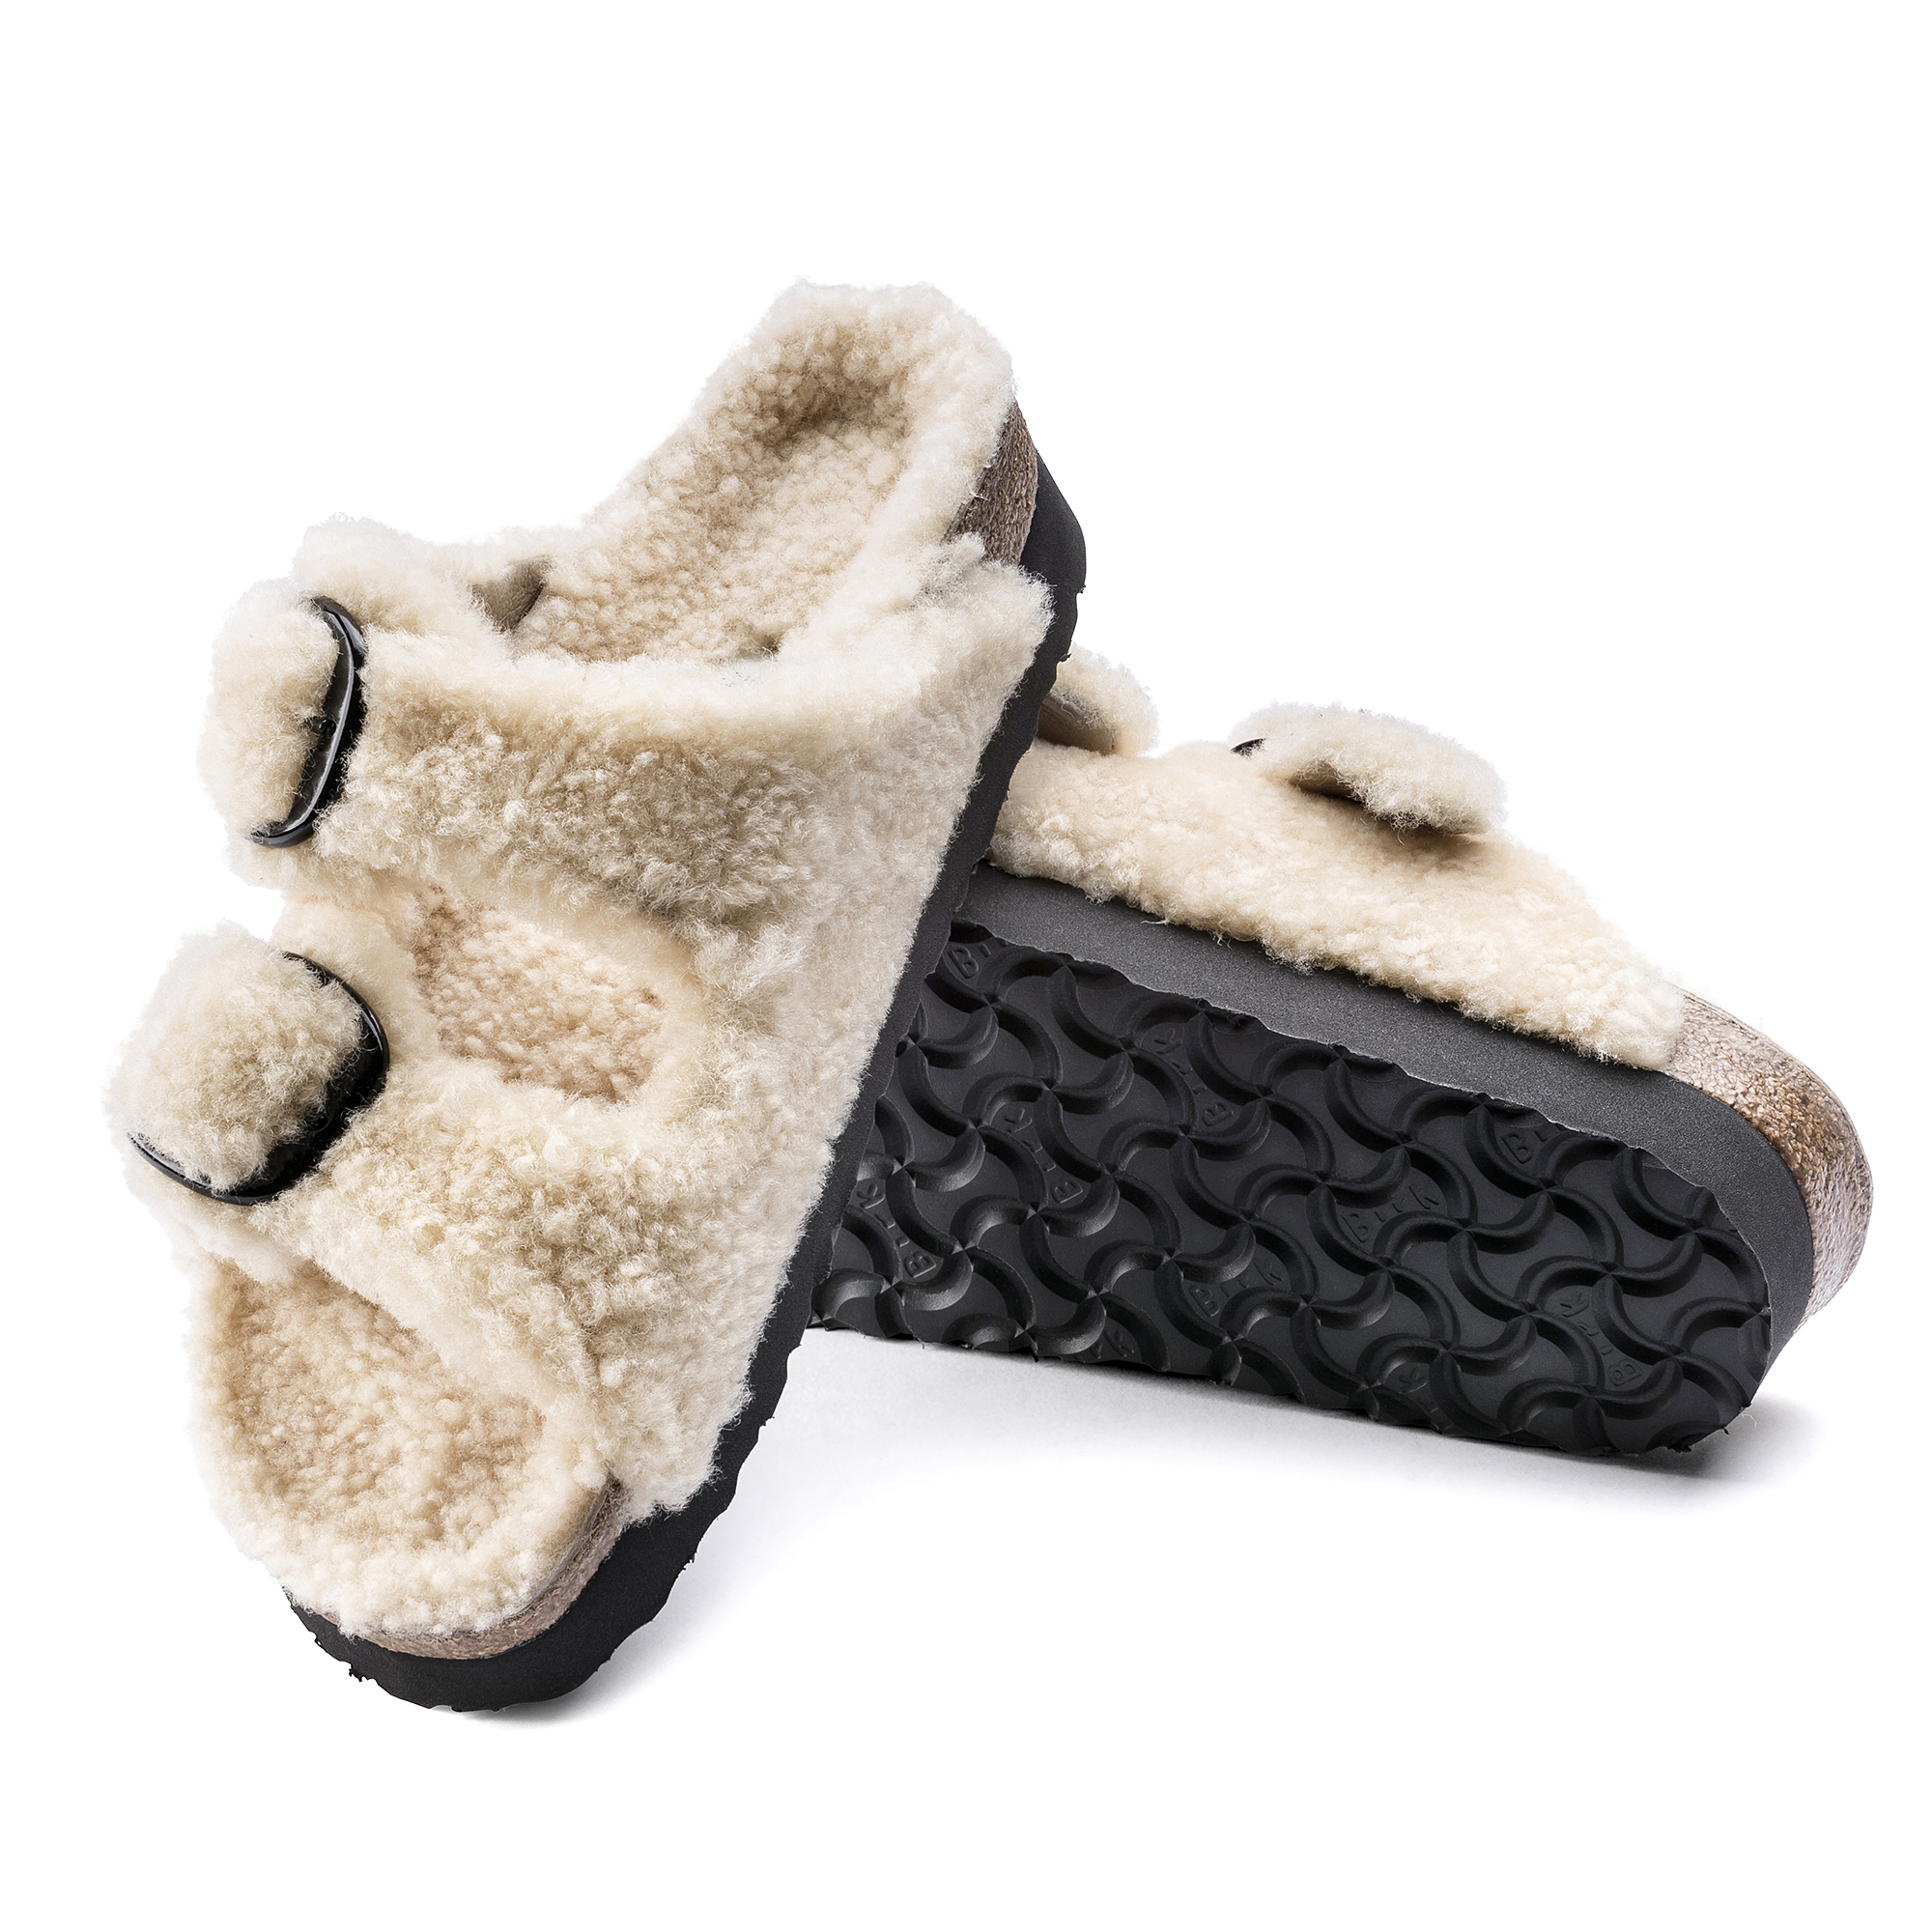 Birkenstock Off-White Arizona Big Buckle Shearling Sandals